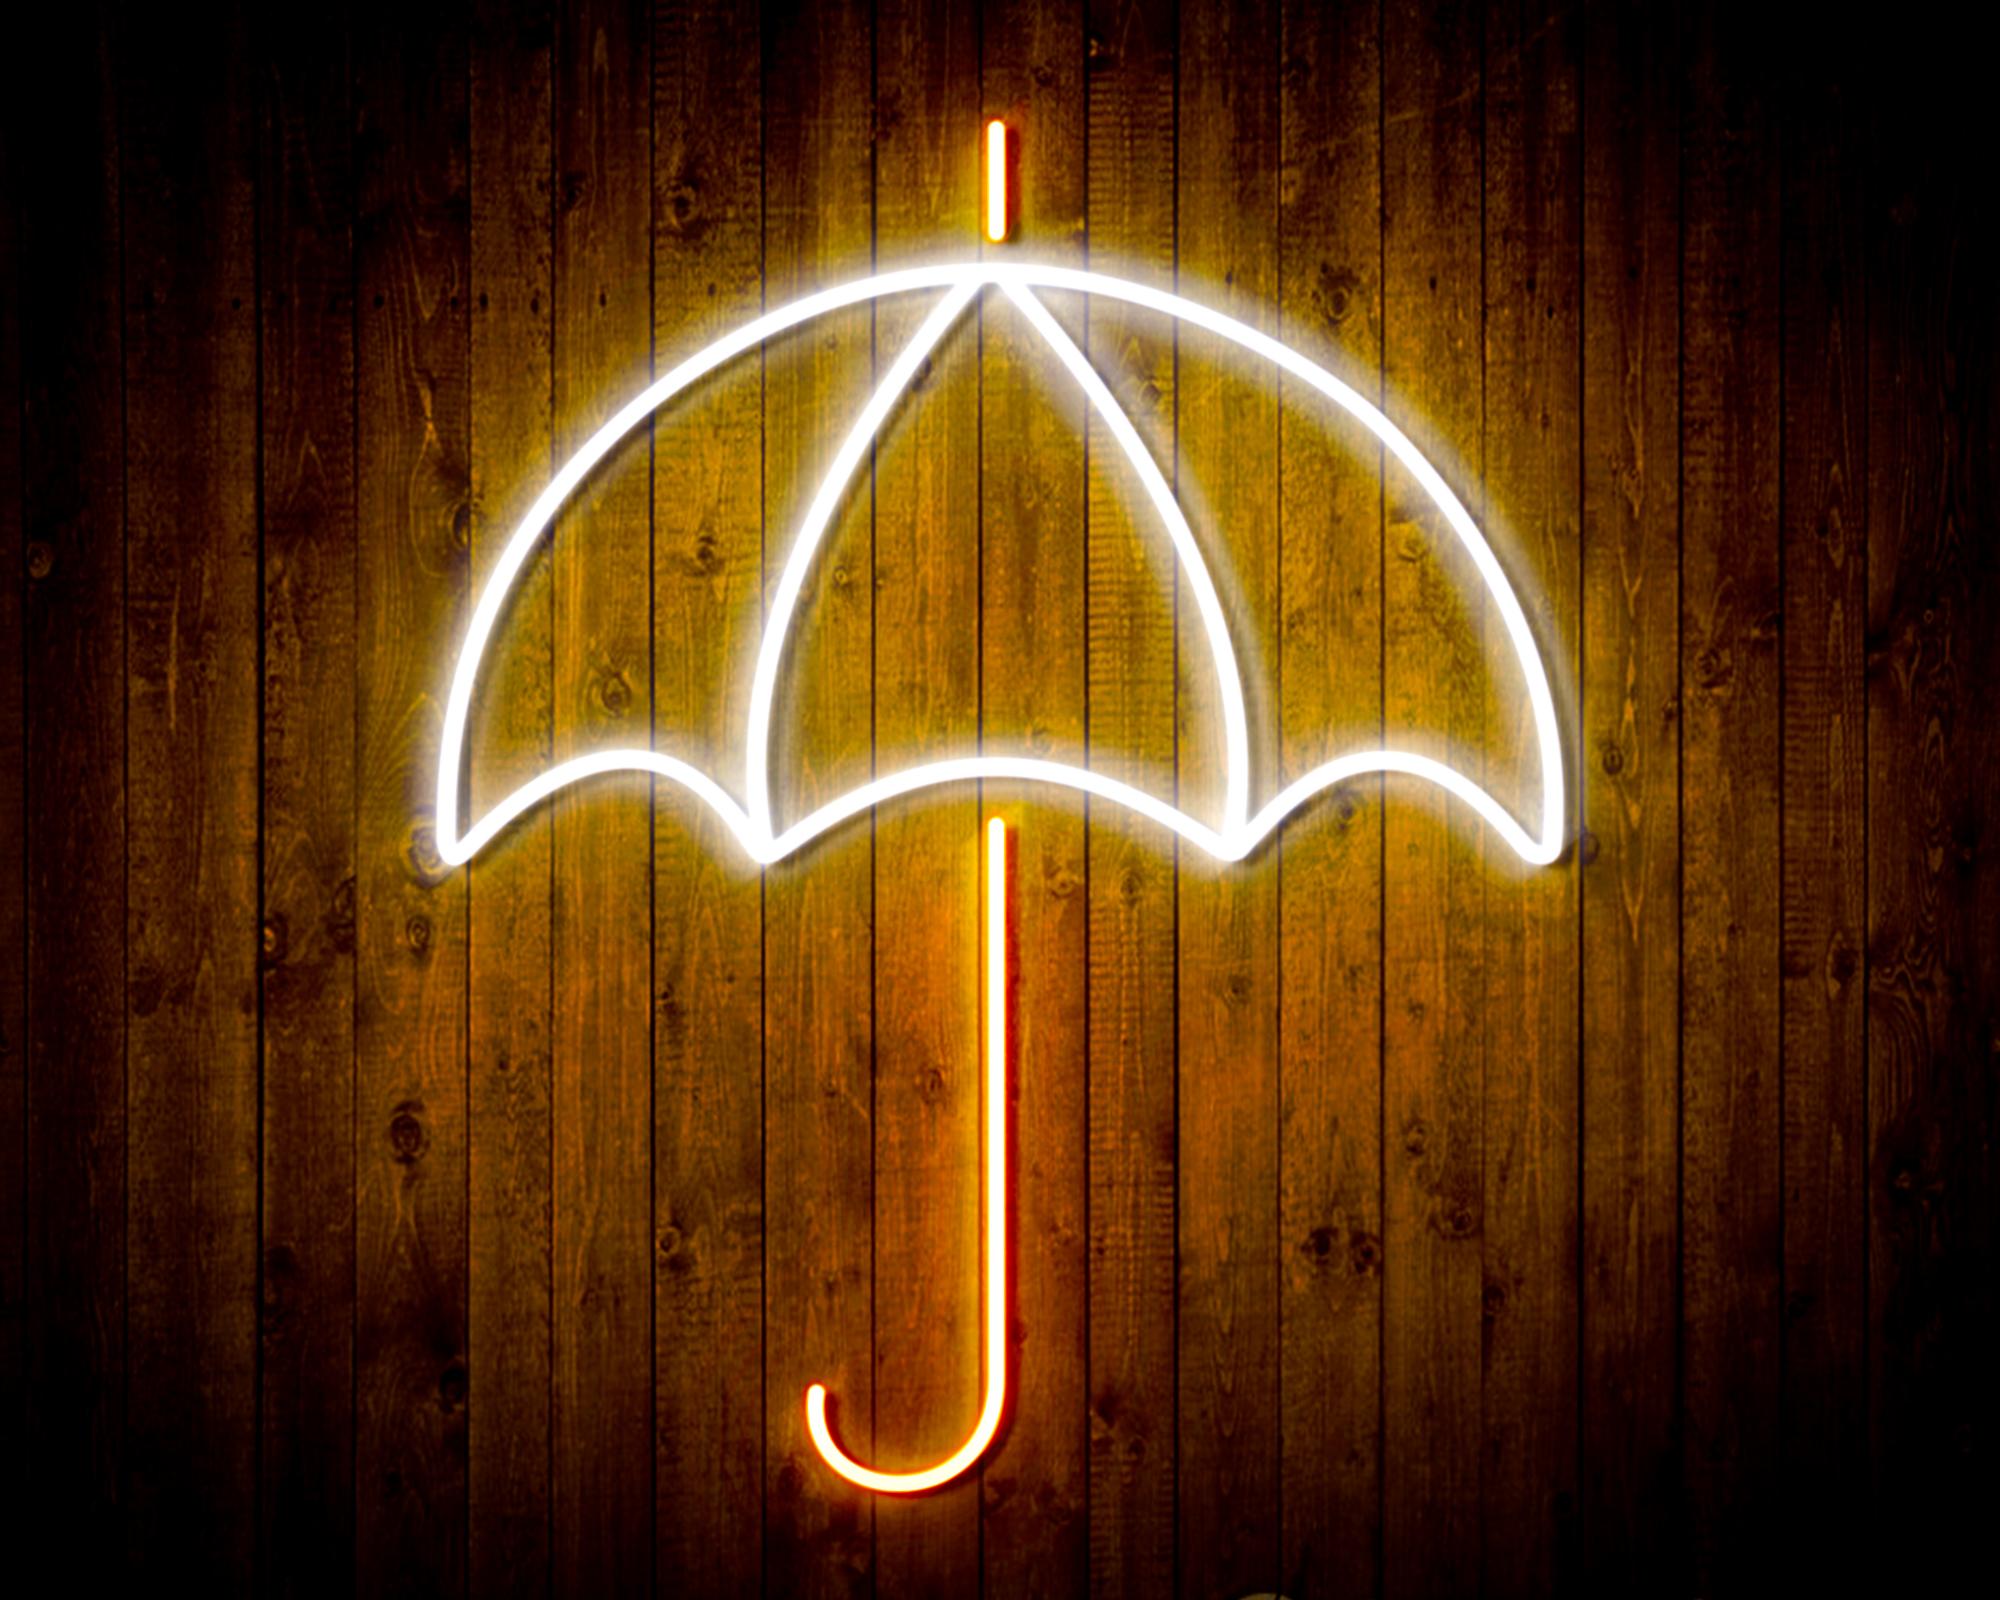 Umbrella LED Neon Sign